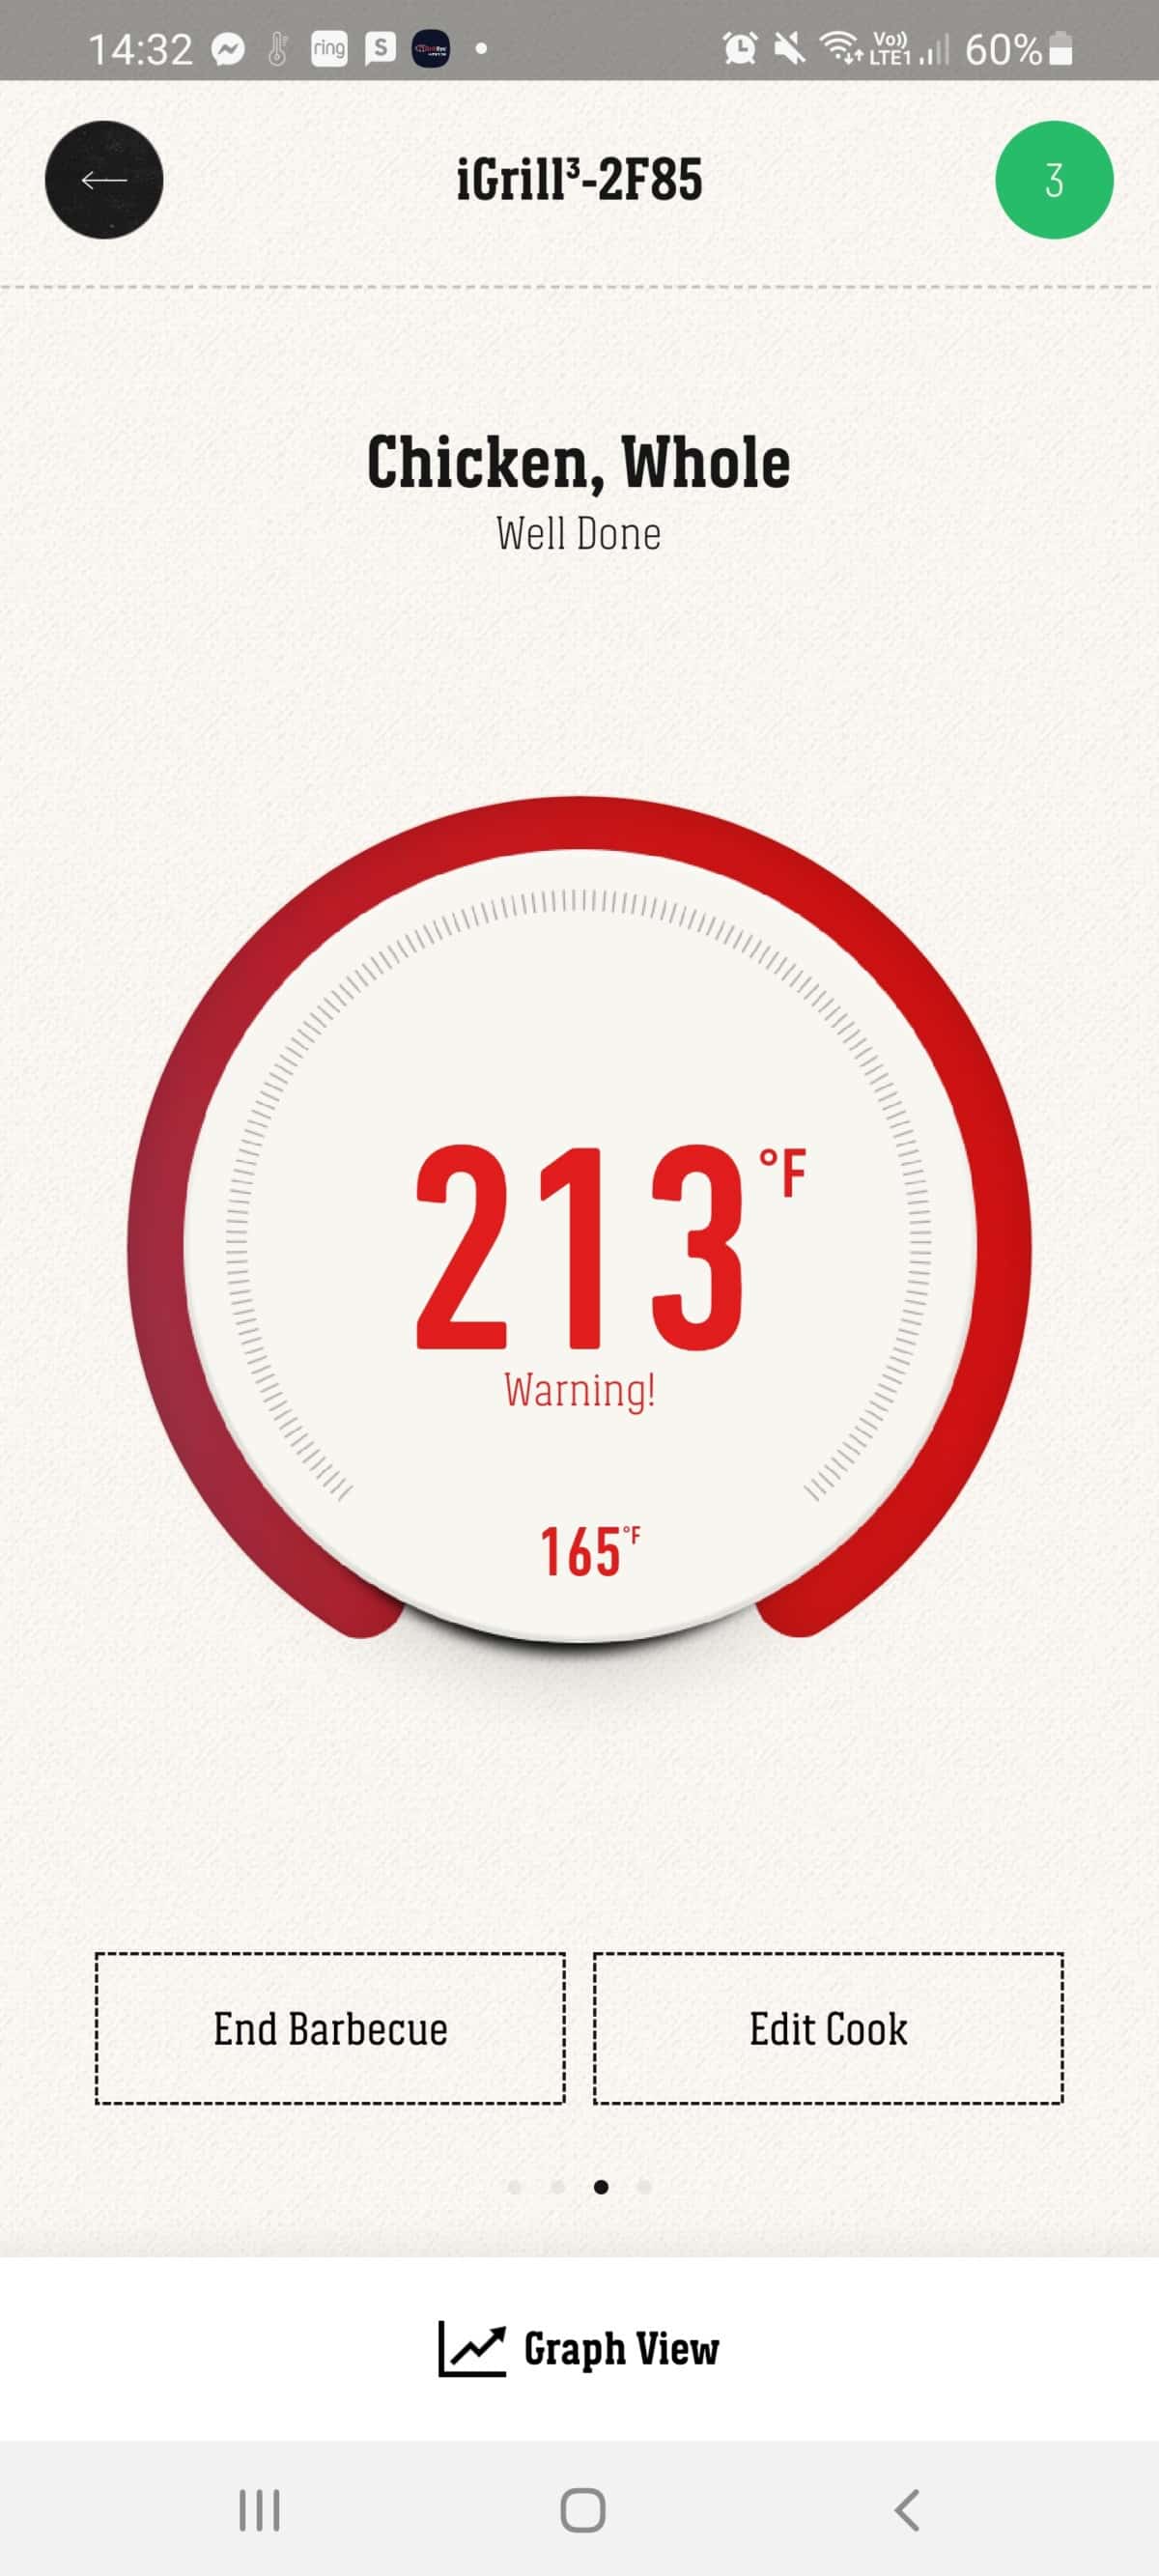 Weber iGrill app screenshot showing 213 degrees Fahrenheit